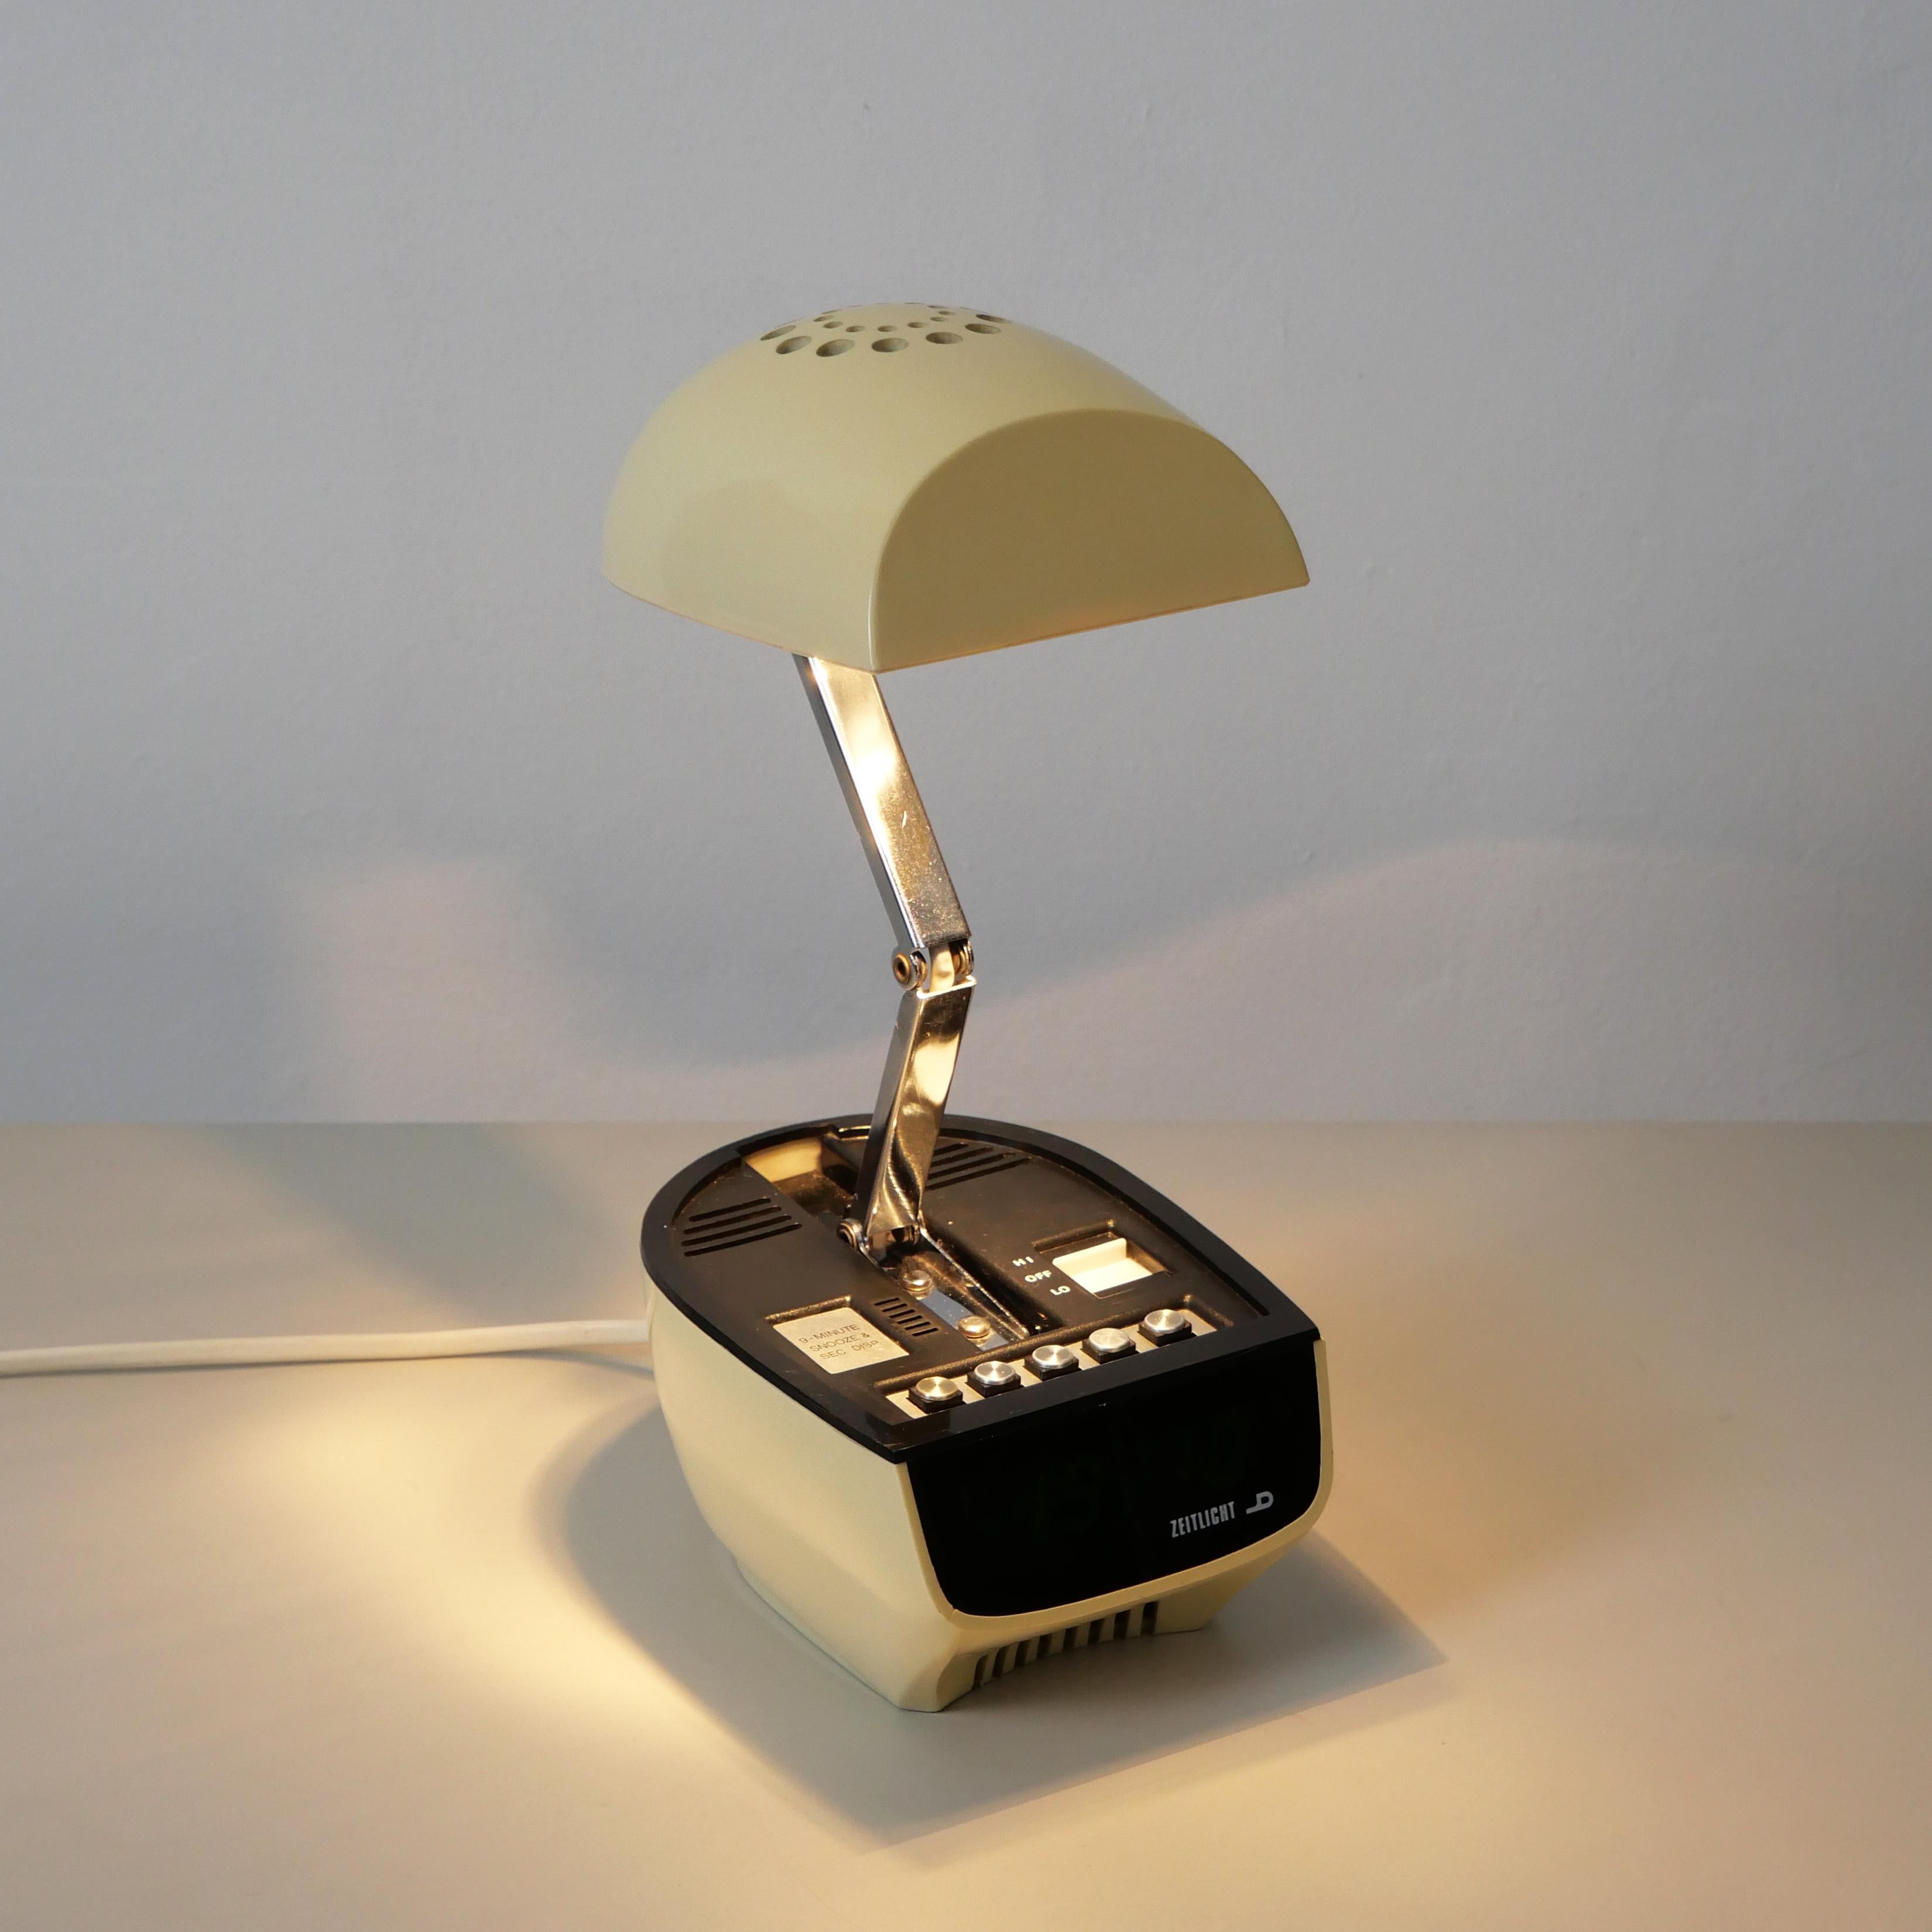 Hong Kong Zeitlicht Desk/Table/Bedside Lamp Alarm Clock, 1970s Spaceage Colombo Panton Era